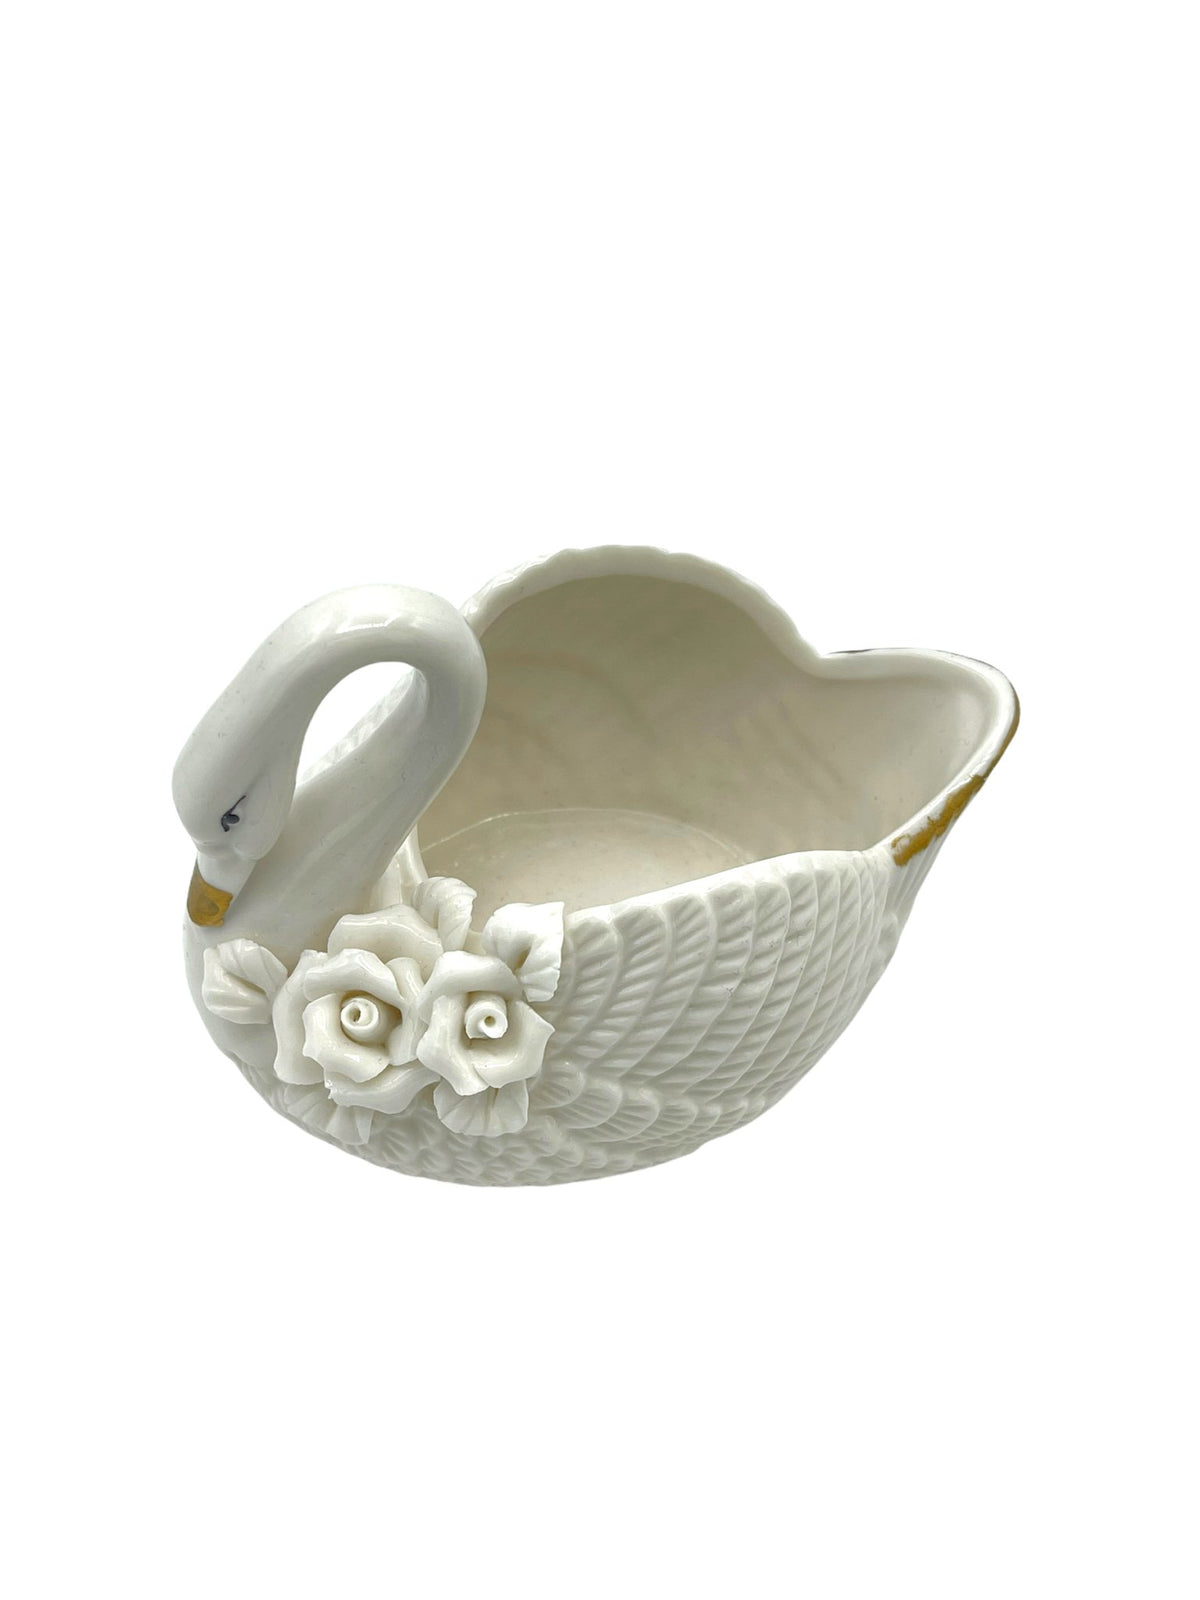 White Swan Porcelain Vintage Vase Trinket Dish - 24 Wishes Vintage Jewelry